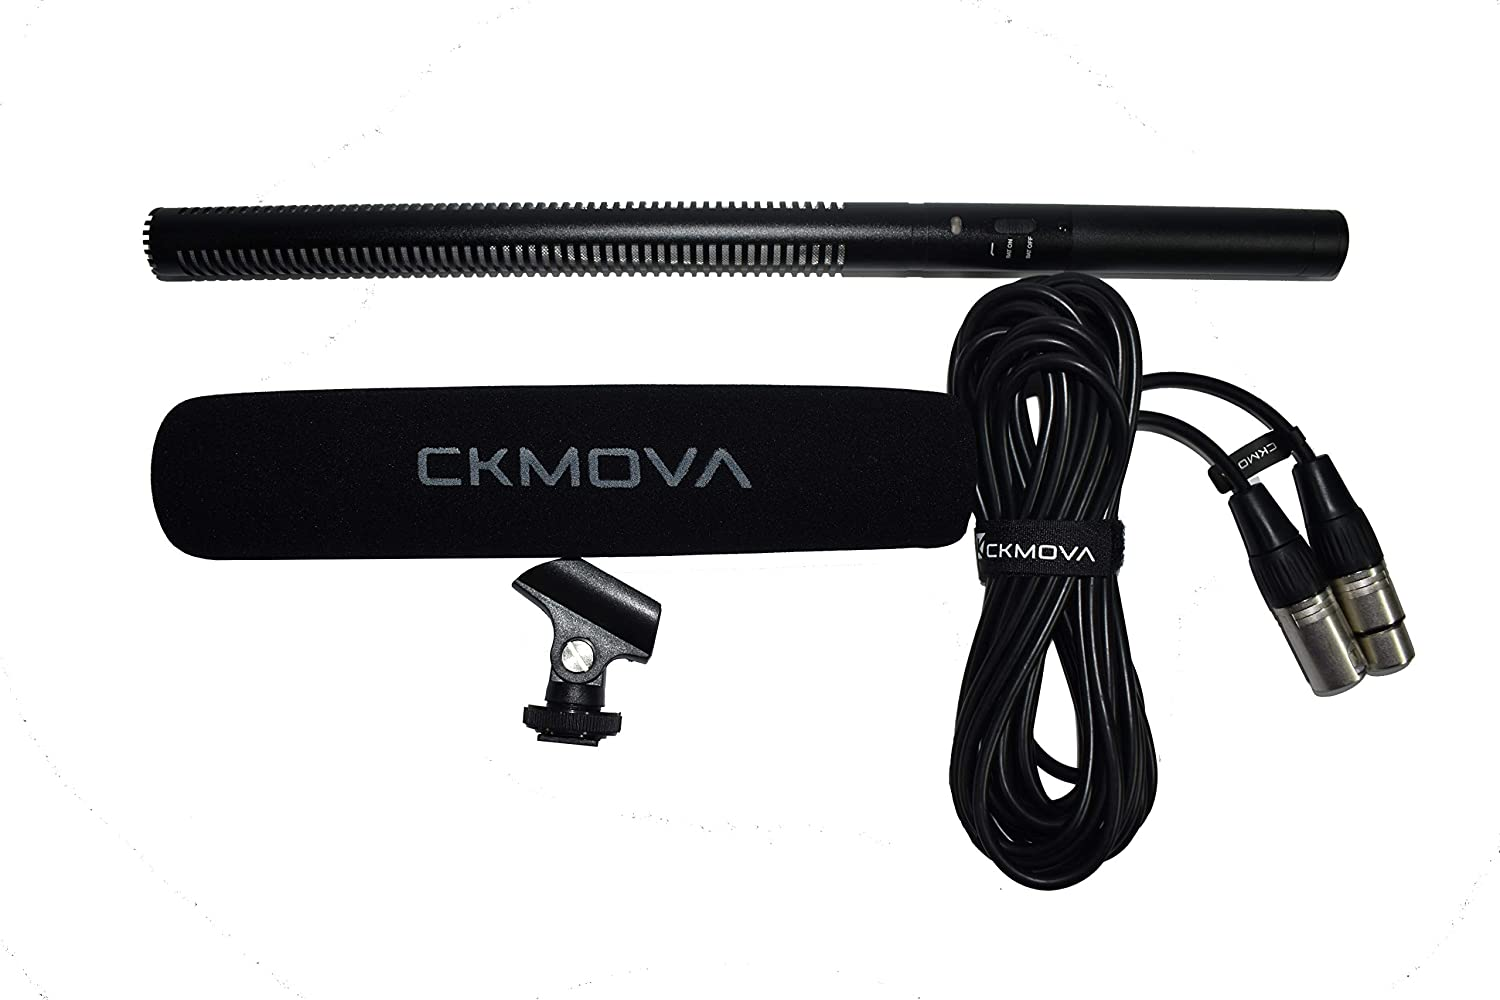 Richtungskondensatormikrofon Mikrofon Schwarz CKMOVA DCM1